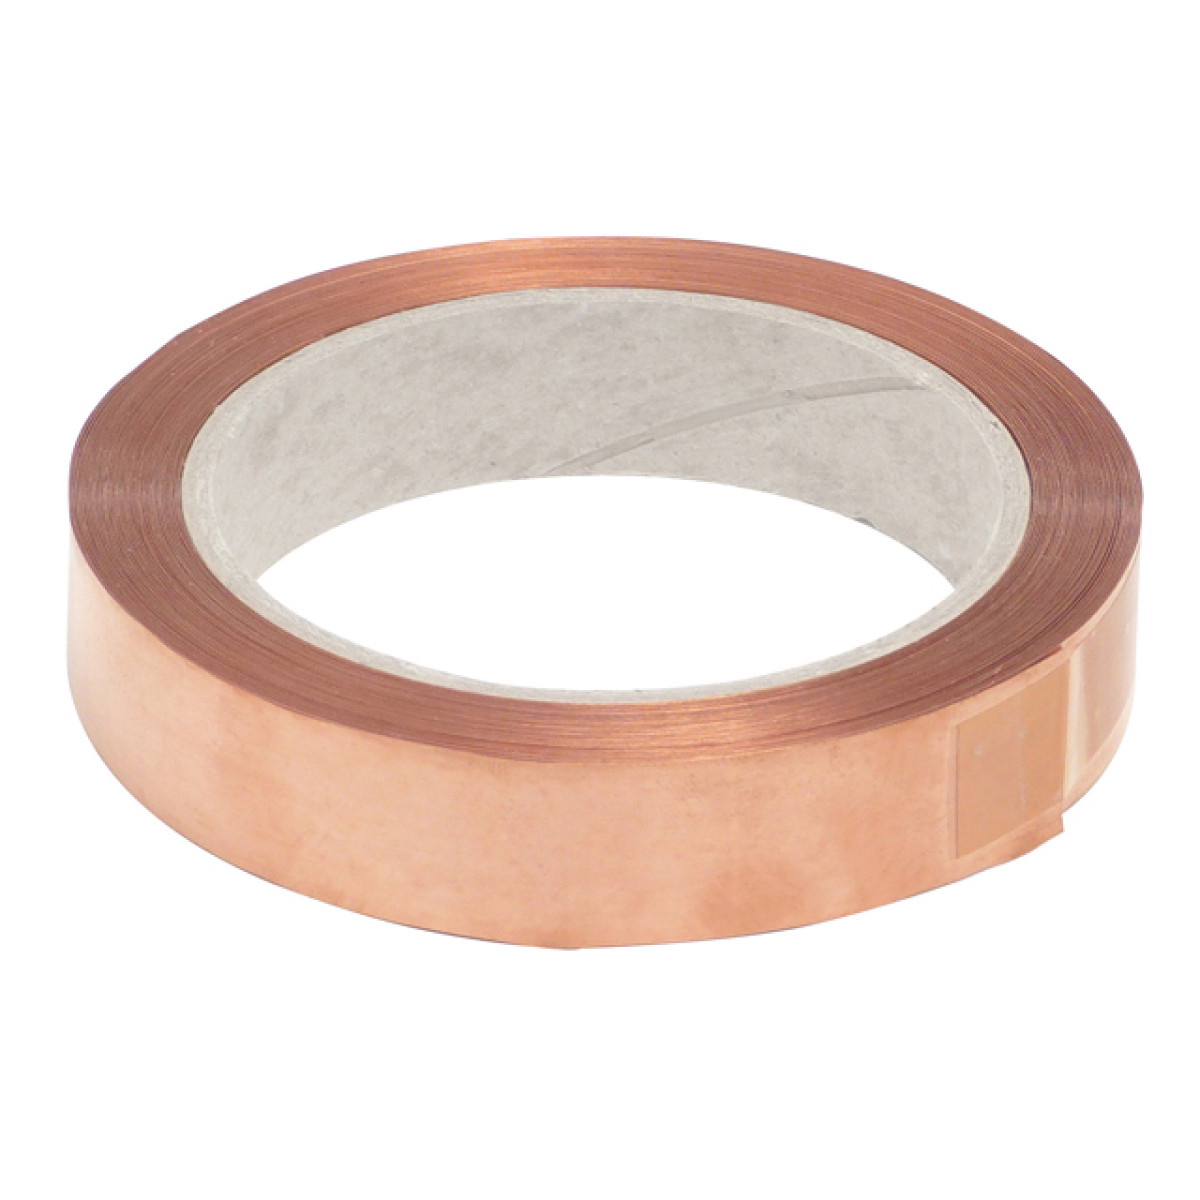 Copper tape - self-adhesive